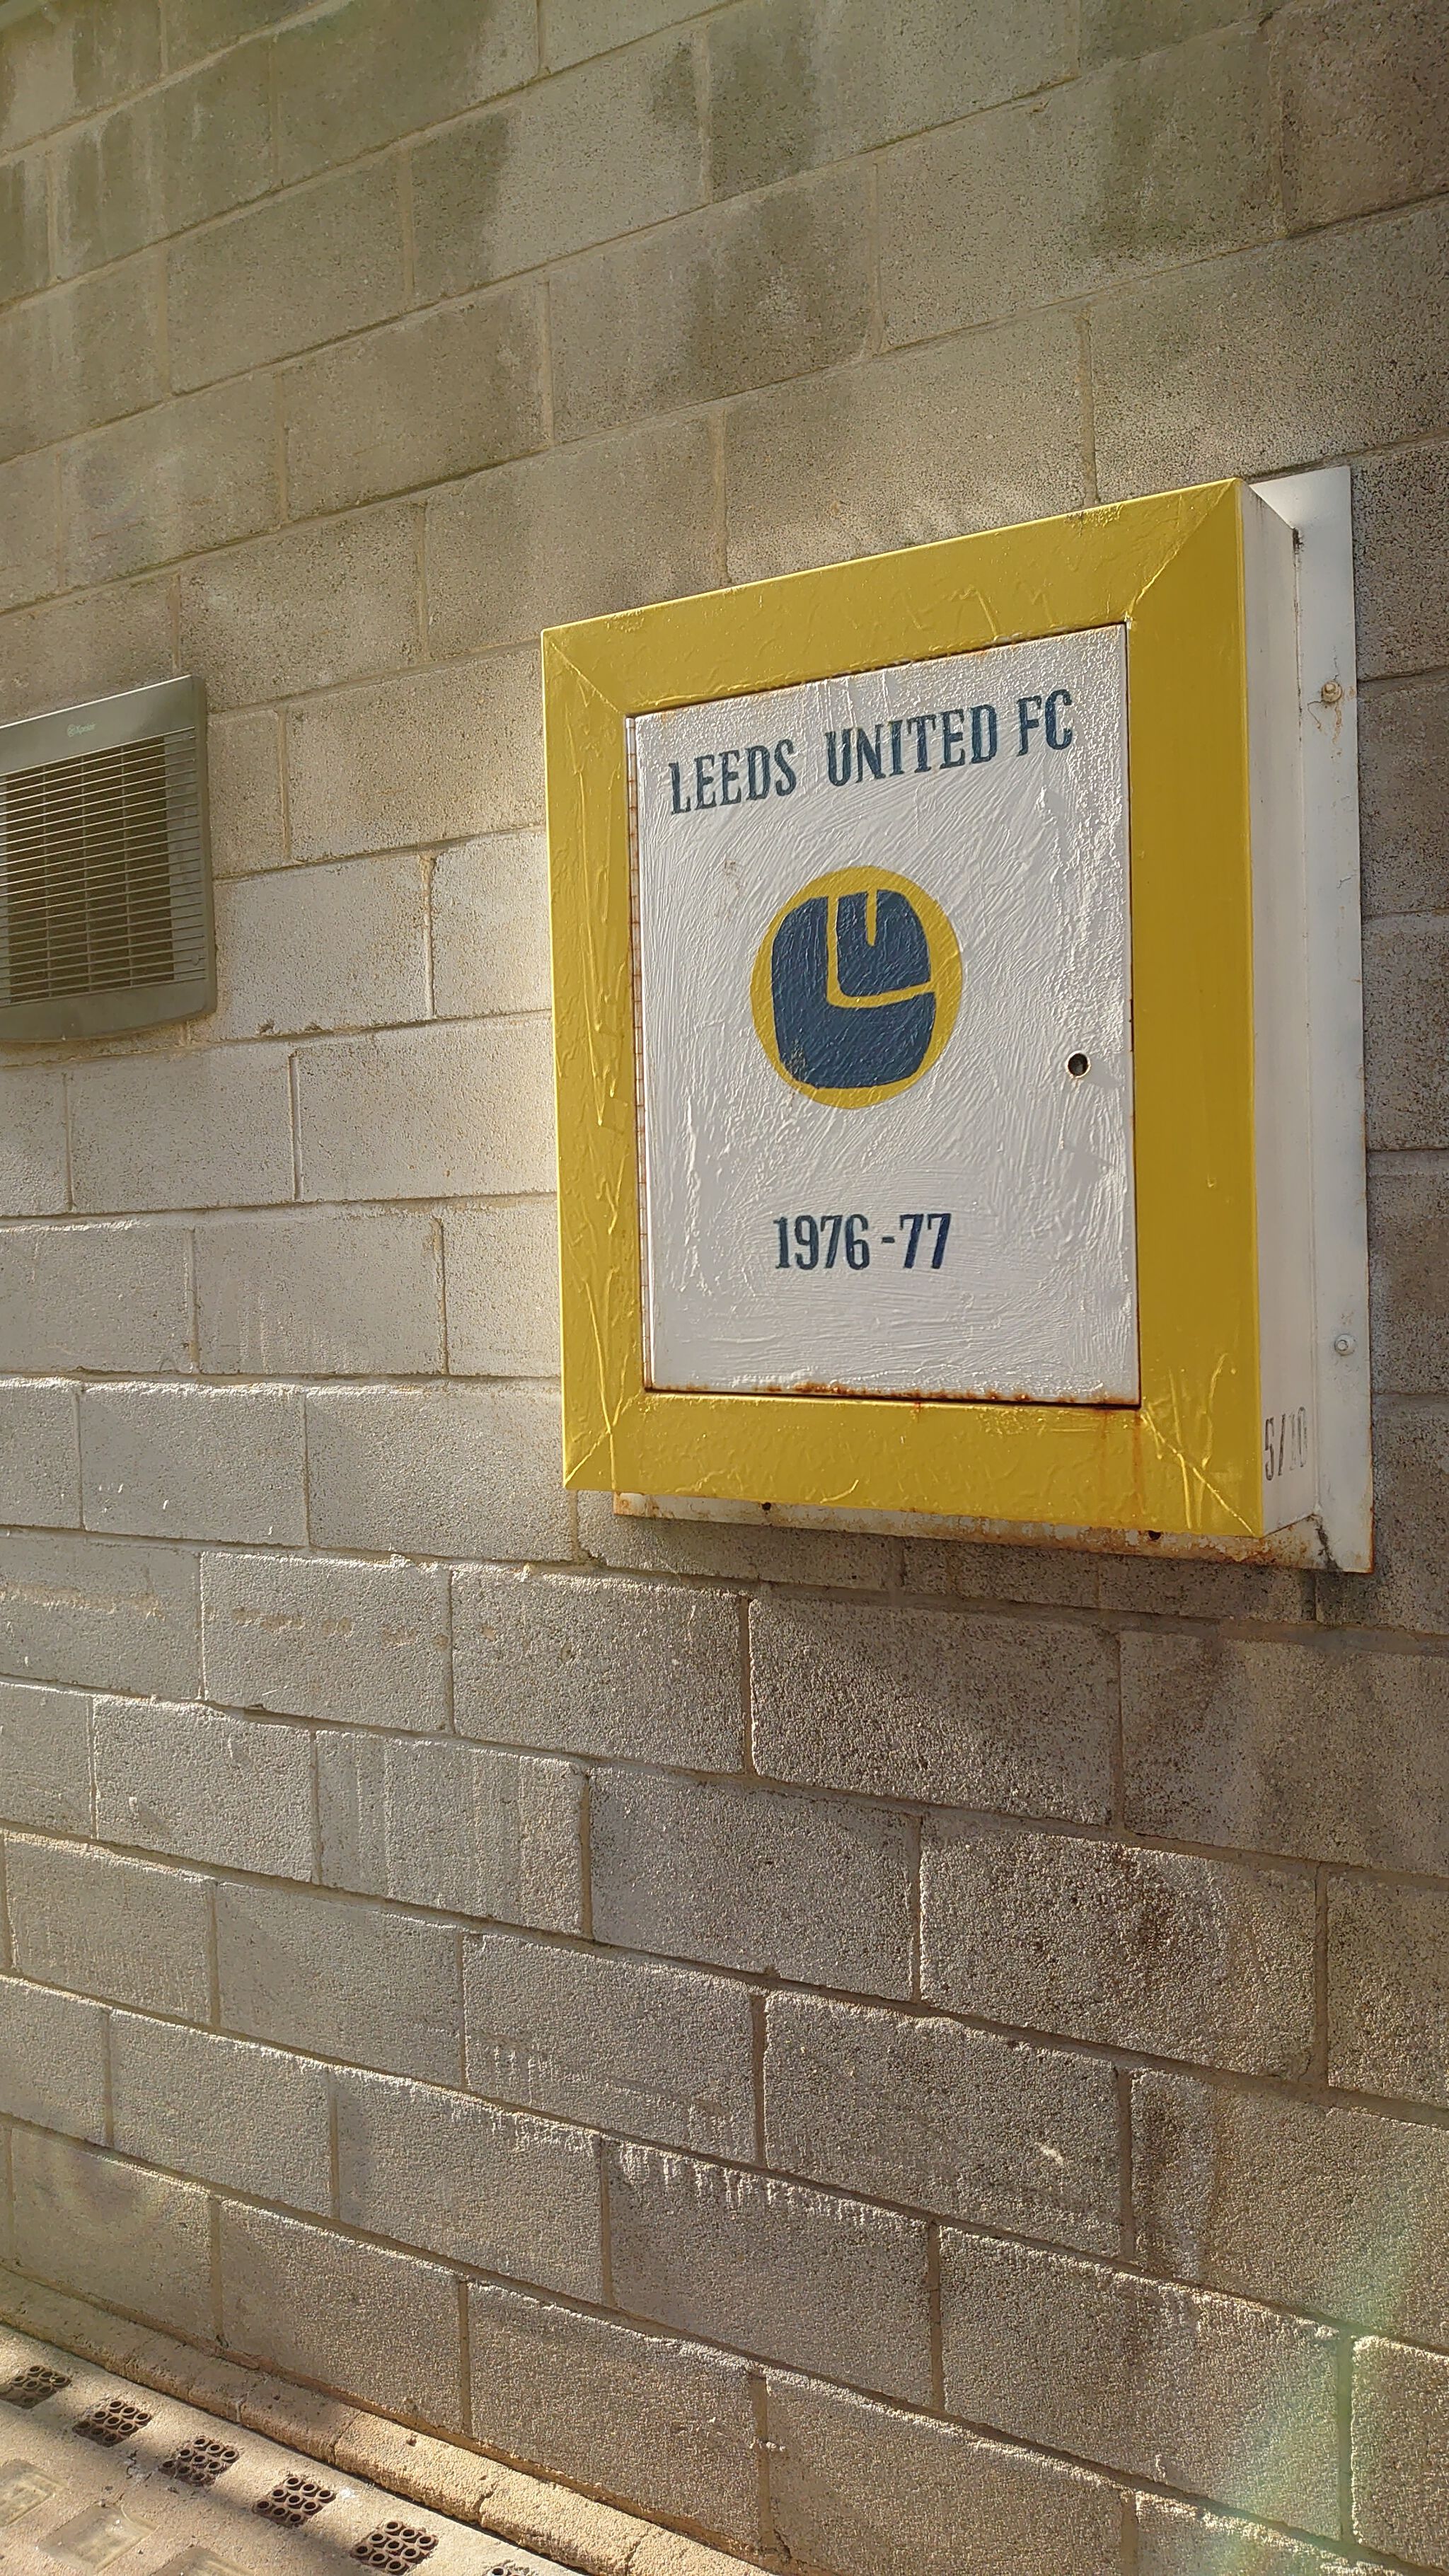 Burley Banksy (Andy McVeigh)&mdash;Leeds United 76-77